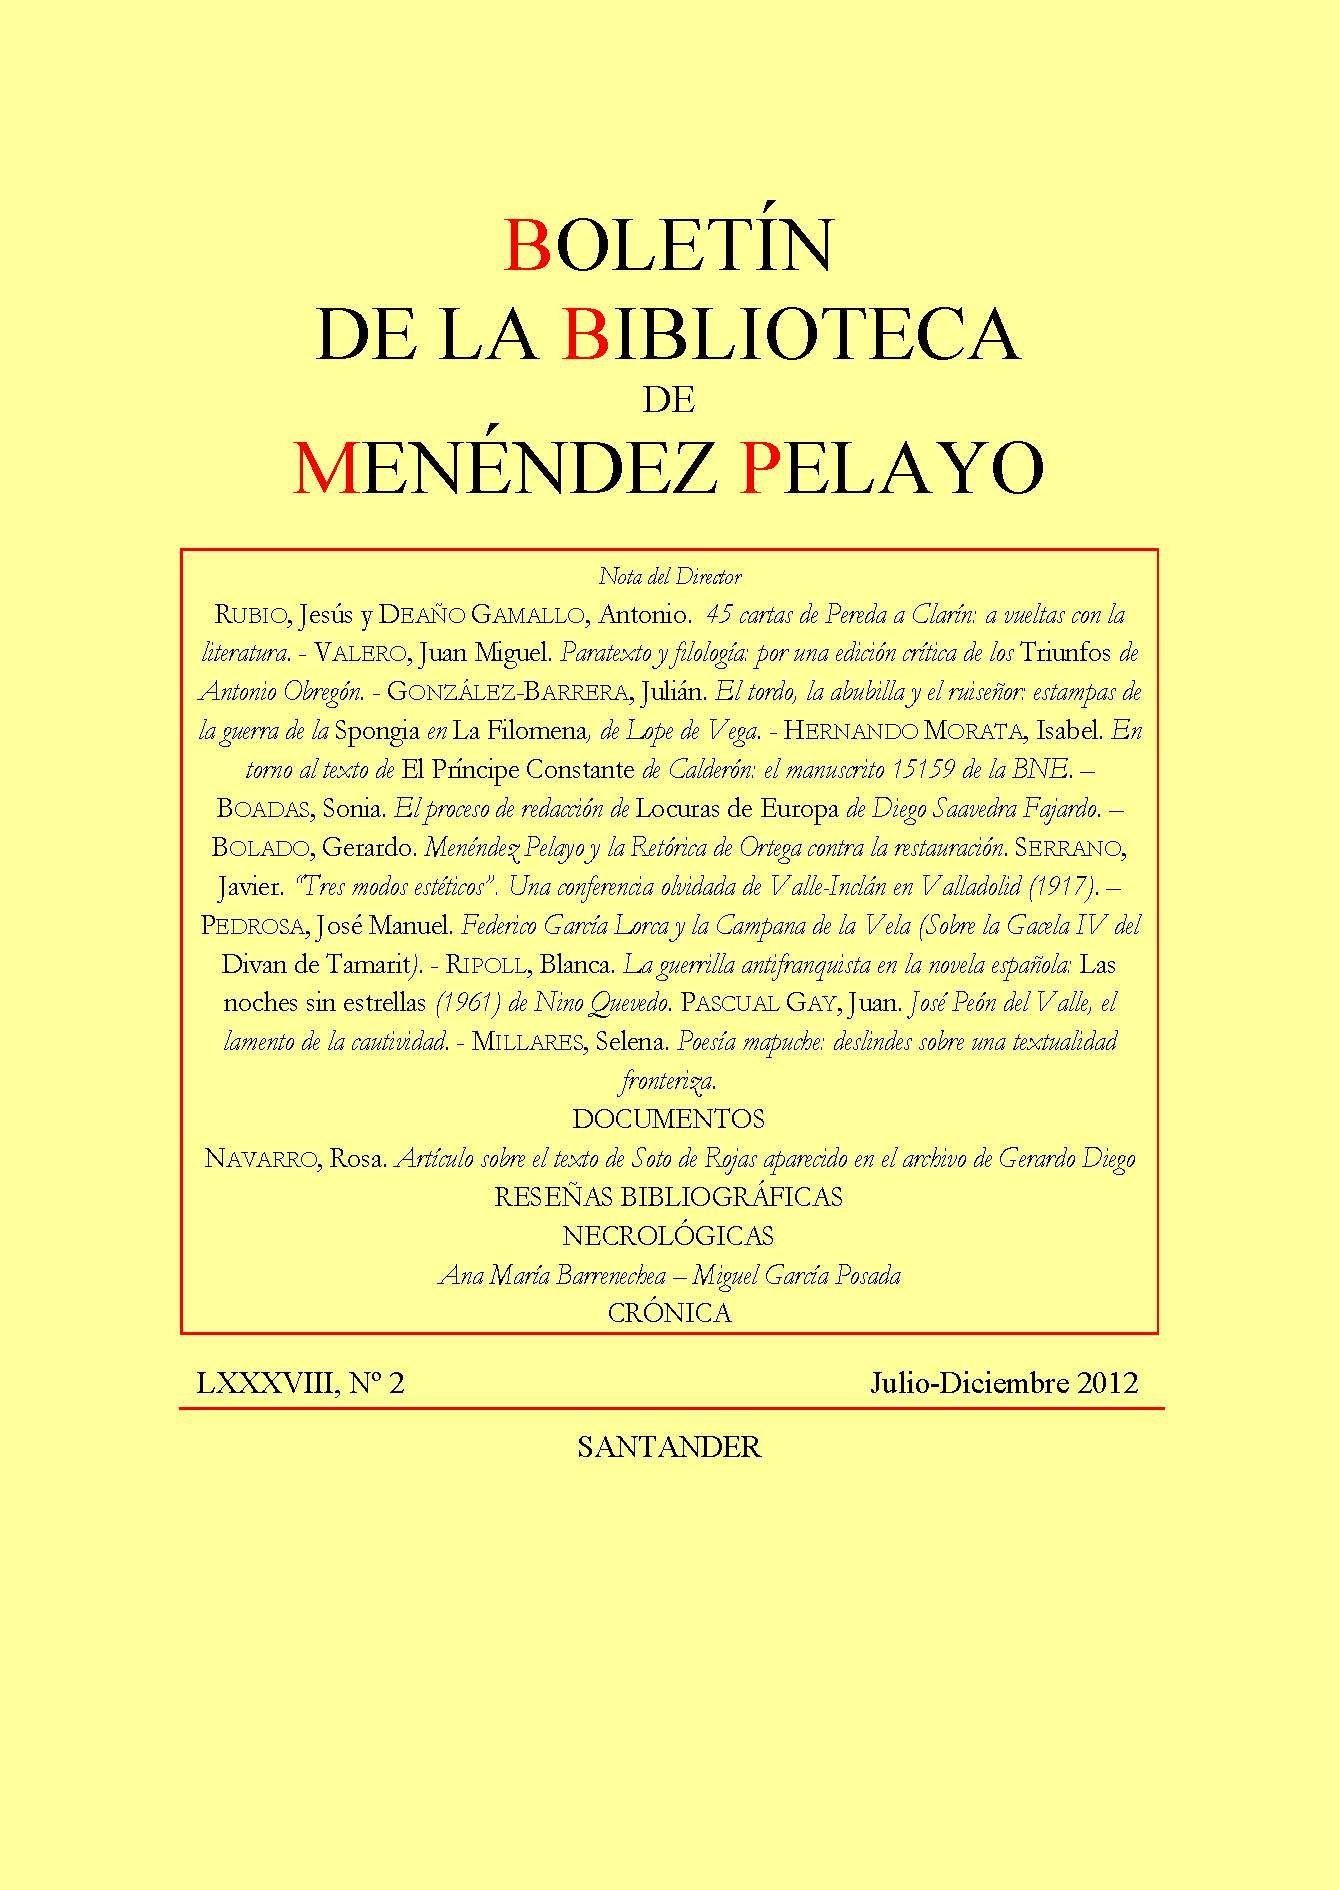 					Ver Vol. 88 Núm. 2 (2012): Boletín de la Biblioteca de Menéndez Pelayo. LXXXVIII. 2012
				